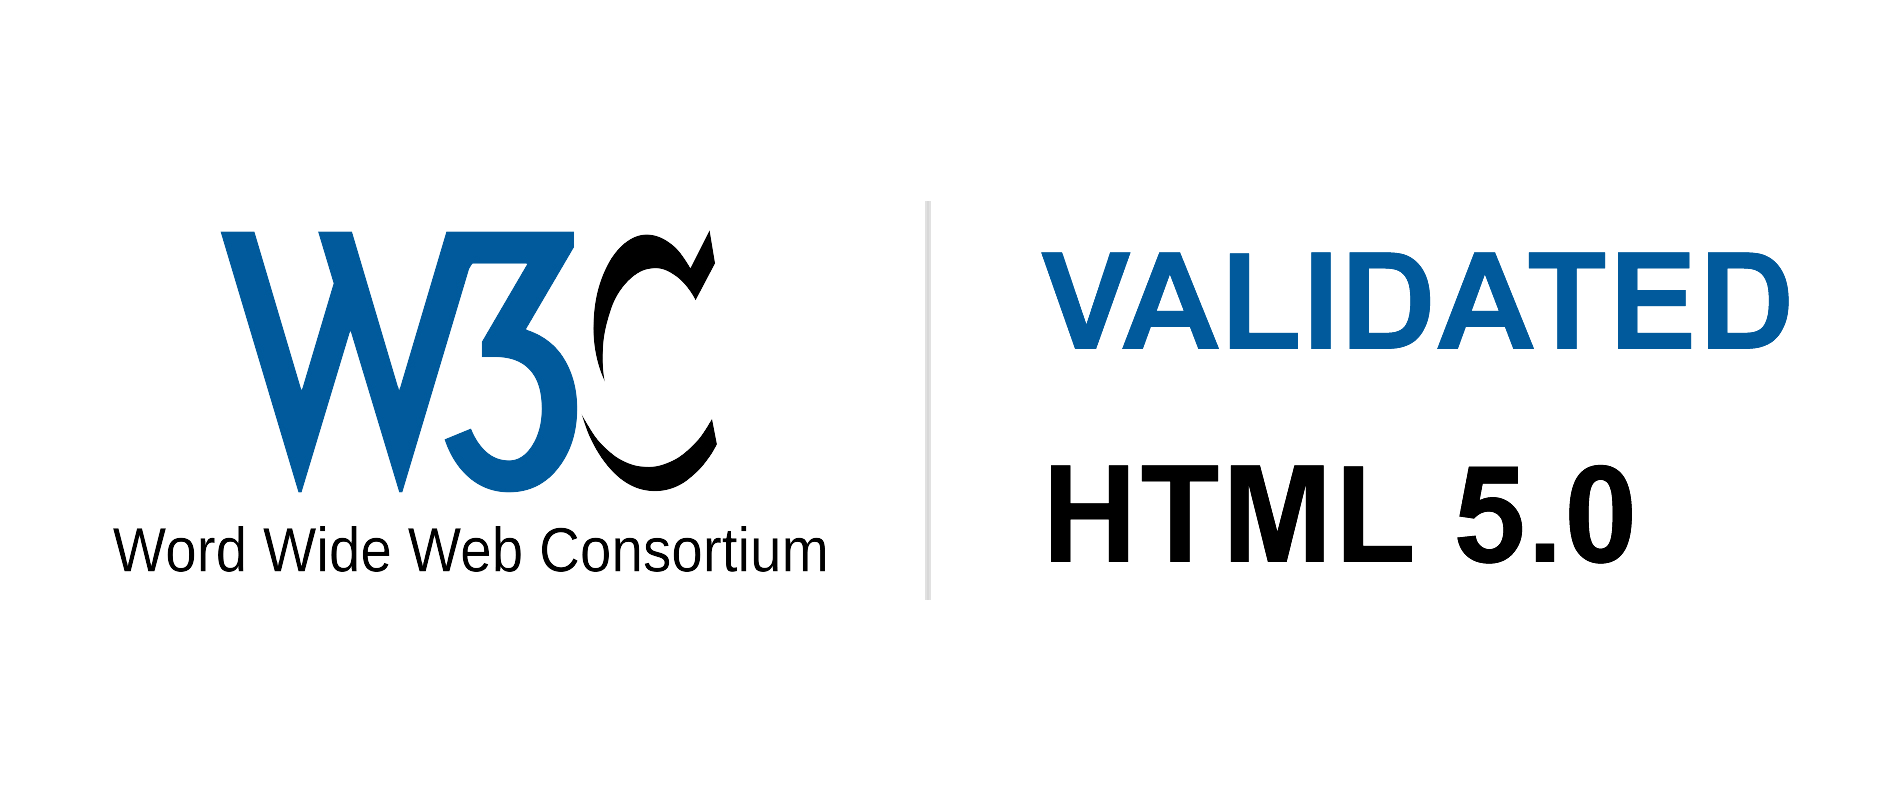 Valid html 5.0 certification banner